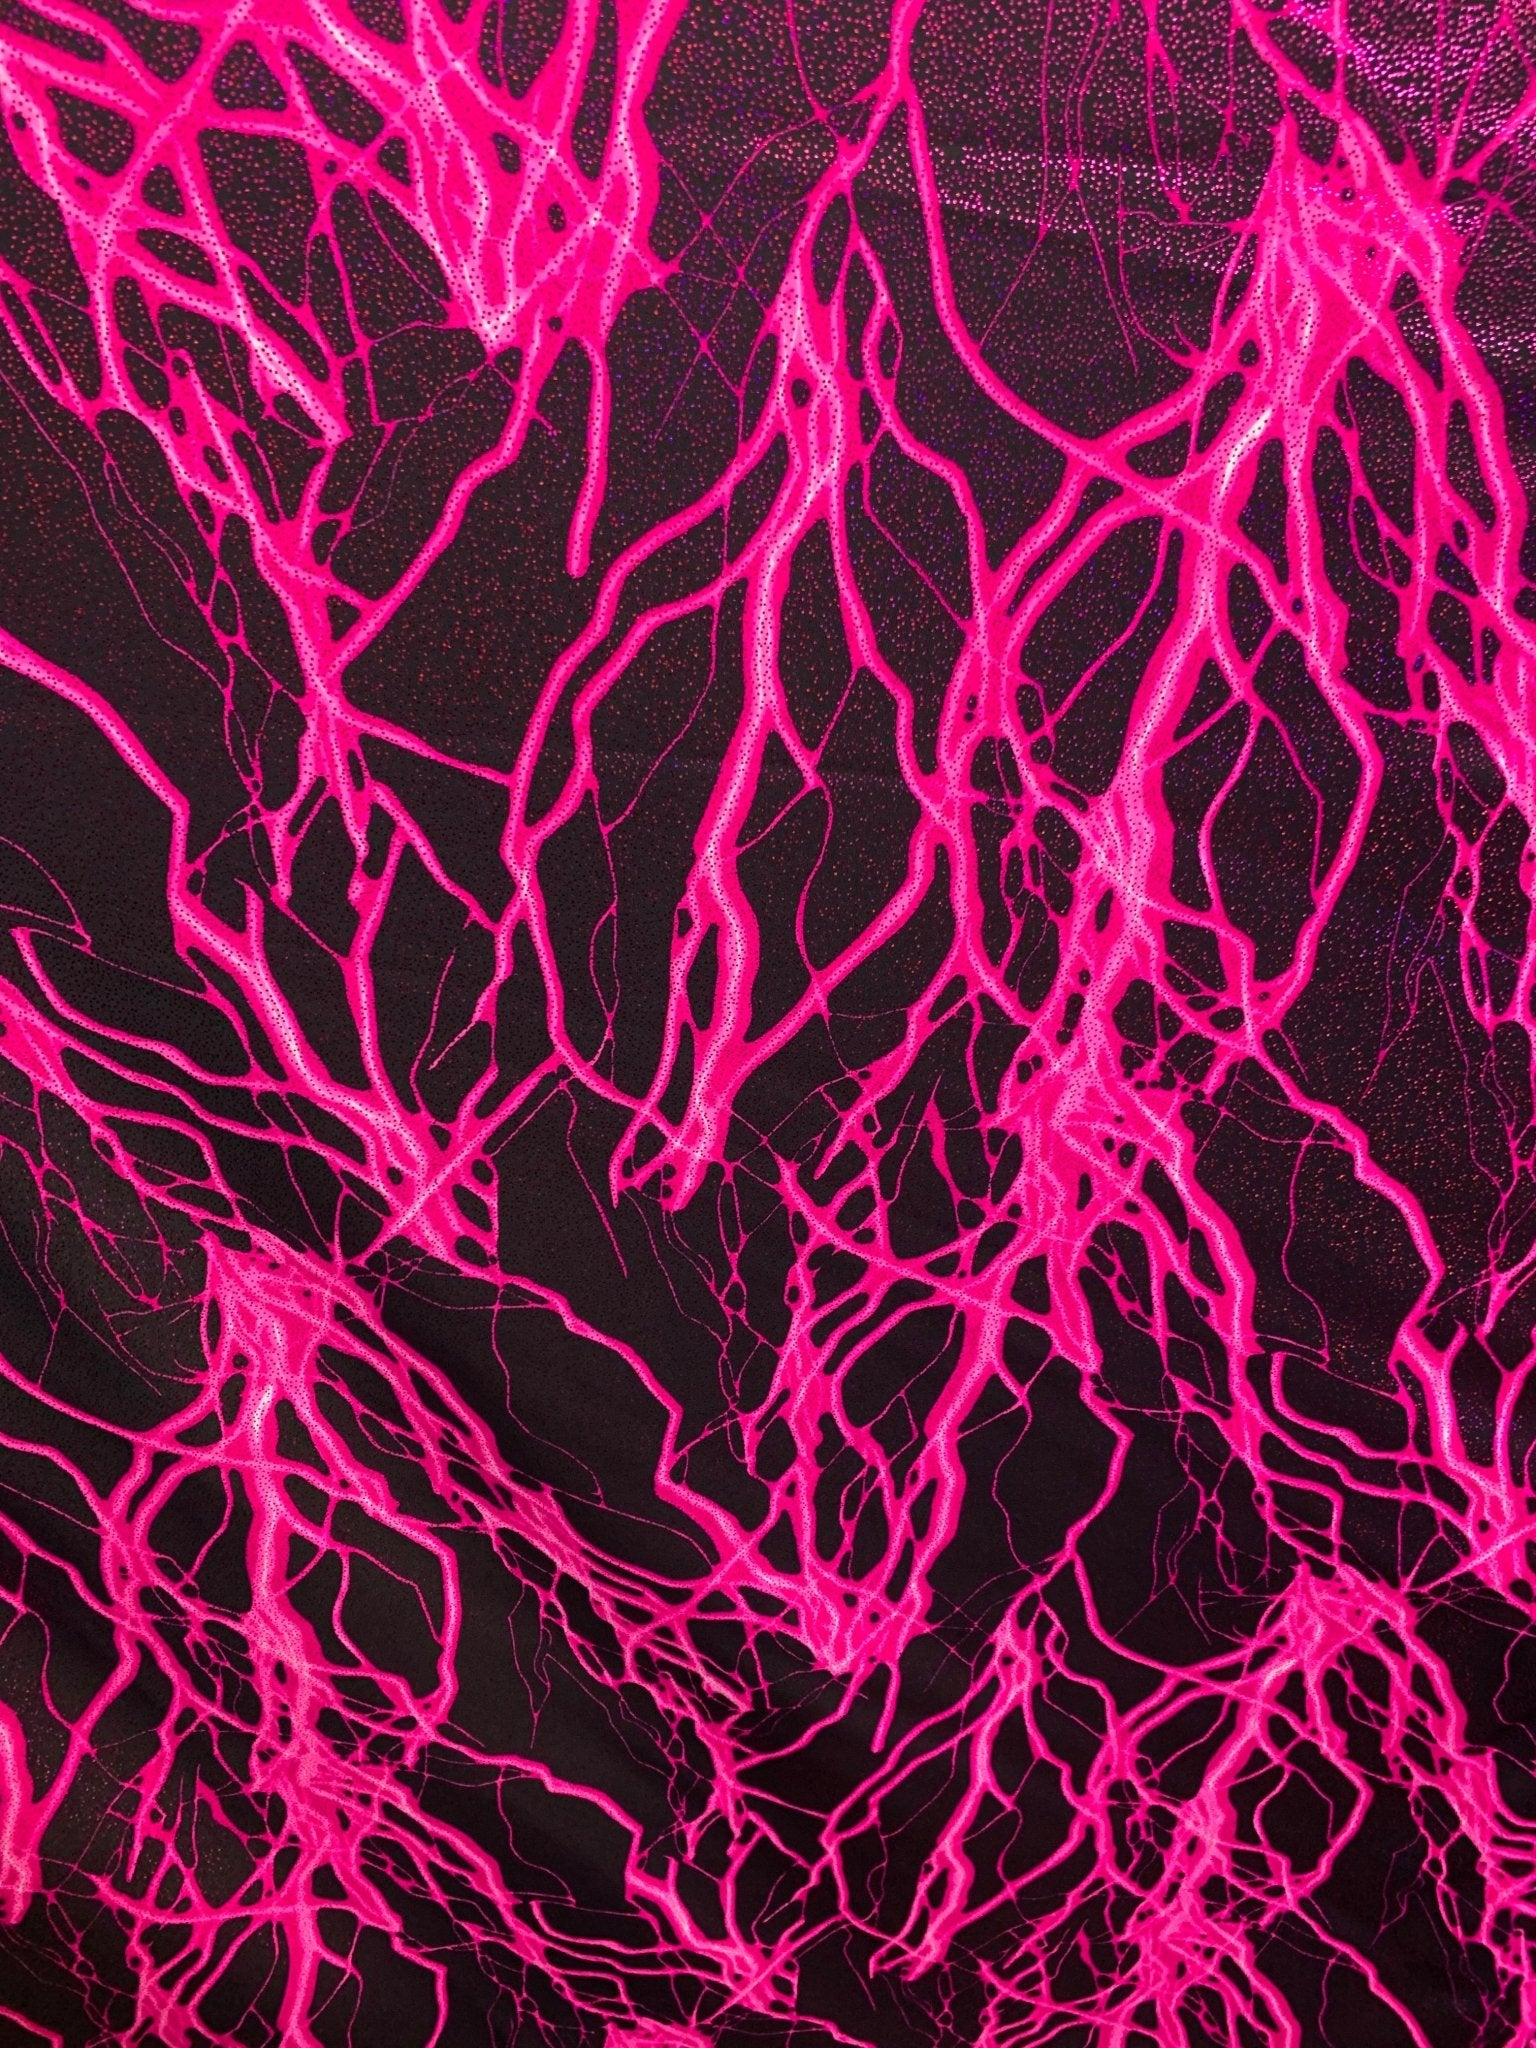 Lighting Bolt Fuchsia/Black Nylon Spandex Fabric By The YardSpandex FabricICEFABRICICE FABRICSLighting Bolt Fuchsia/Black Nylon Spandex Fabric By The Yard ICEFABRIC